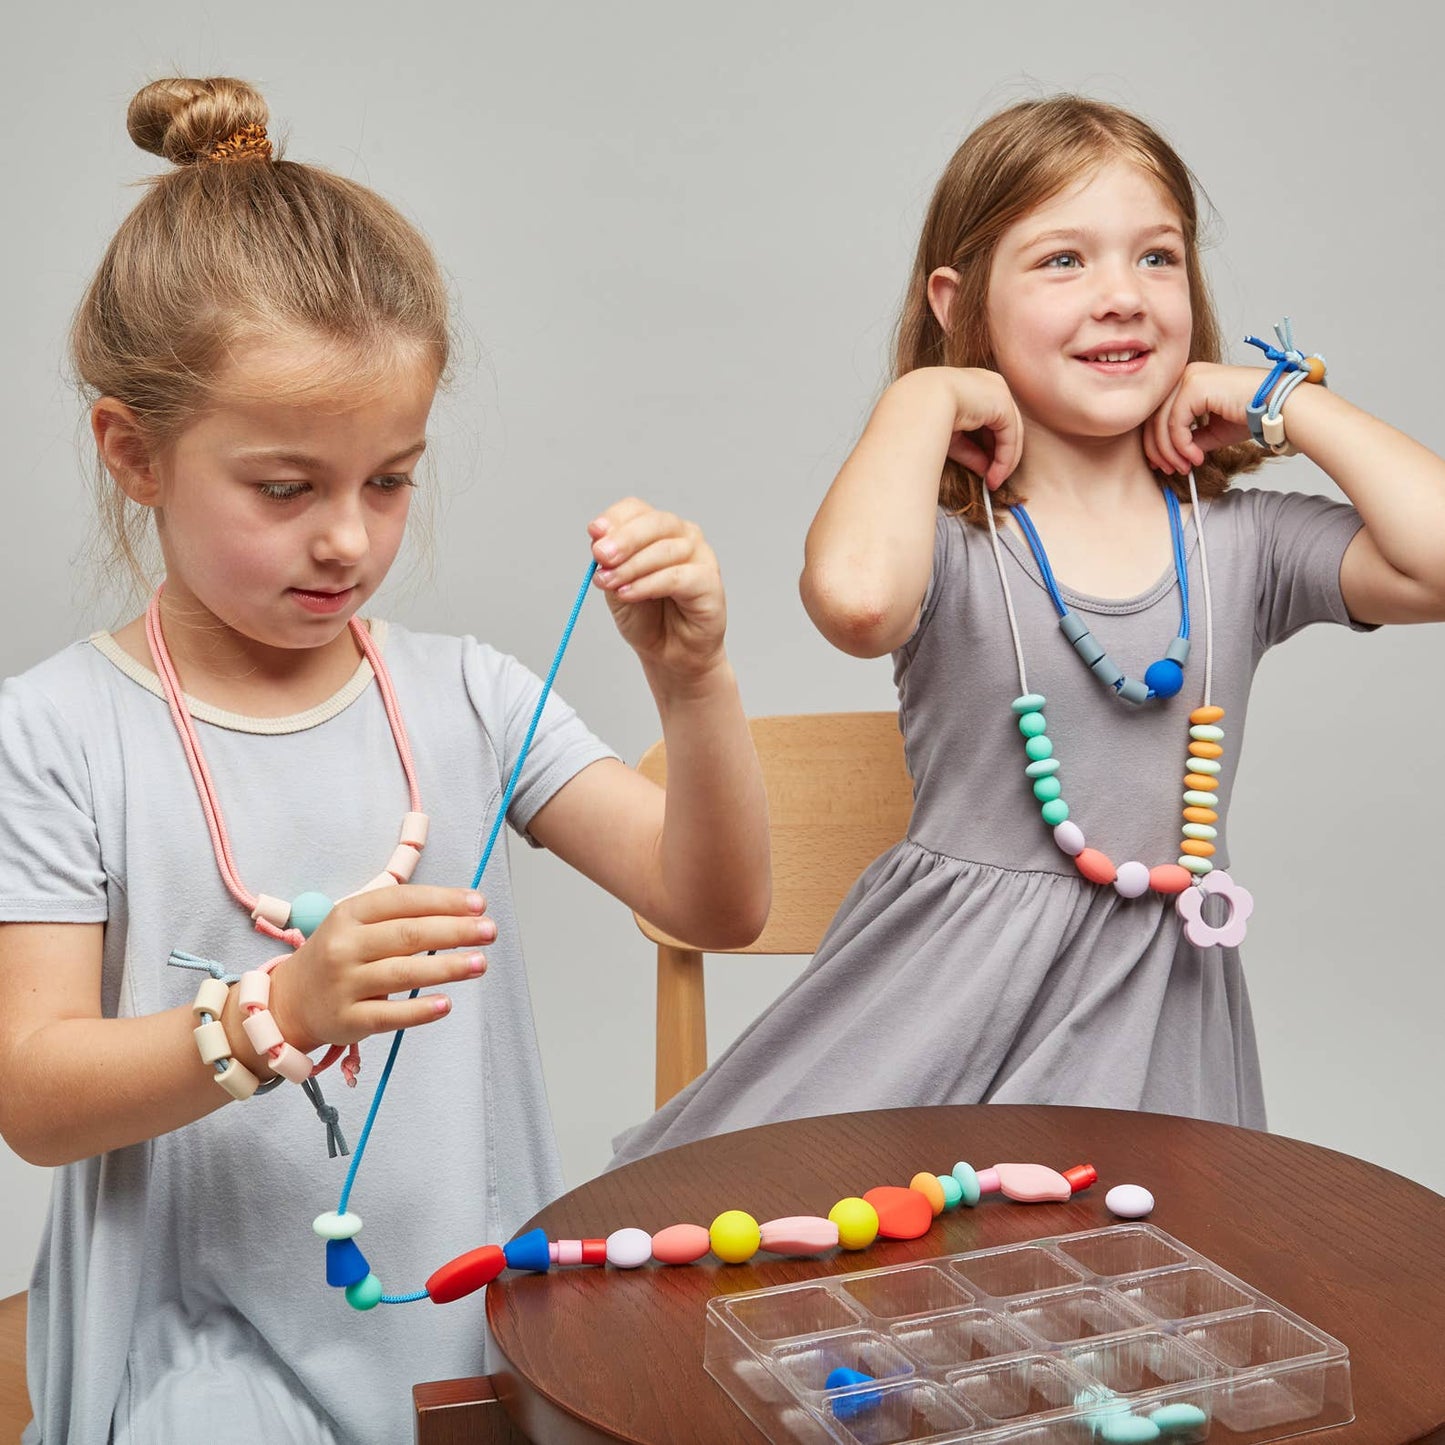 Rainbow DIY Sensory Necklace Kit